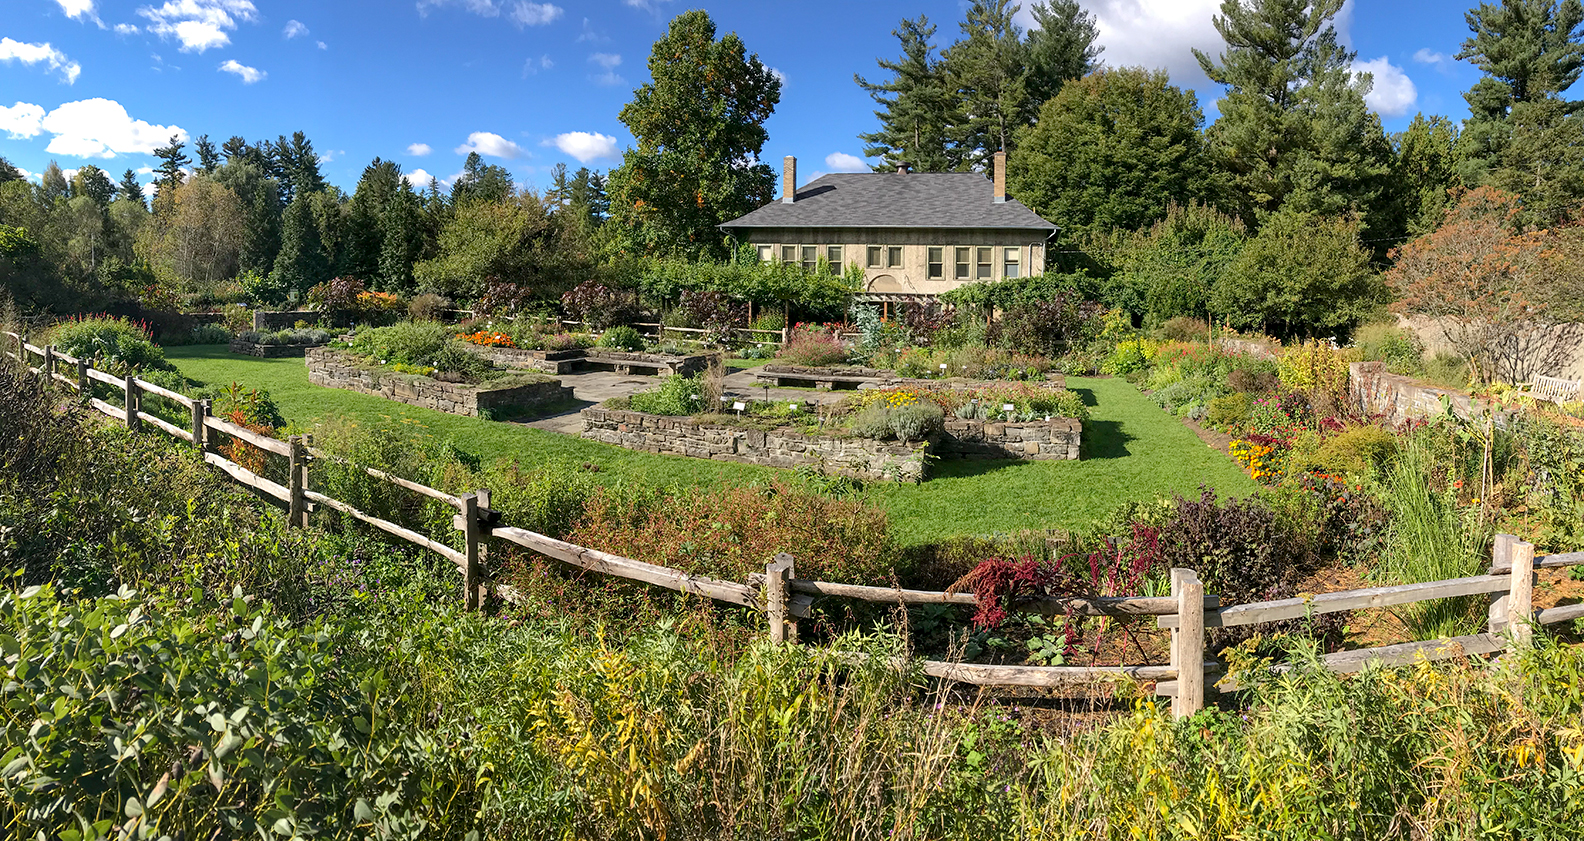 The Mikereport Cornell Botanical Garden